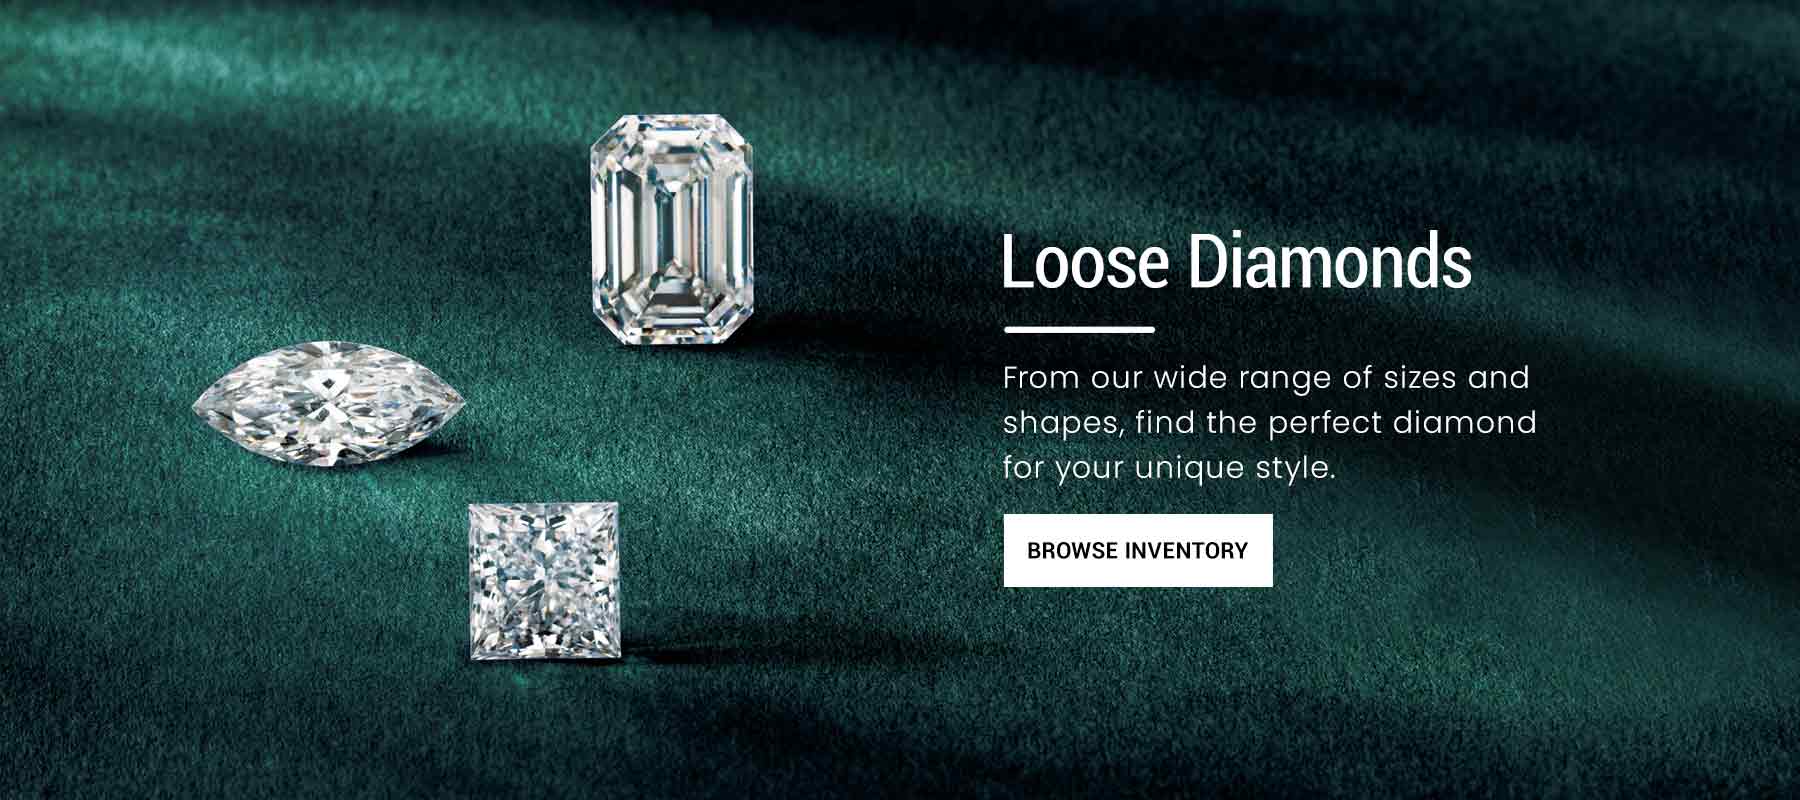 Loose Diamonds at Kent Island Jewelry